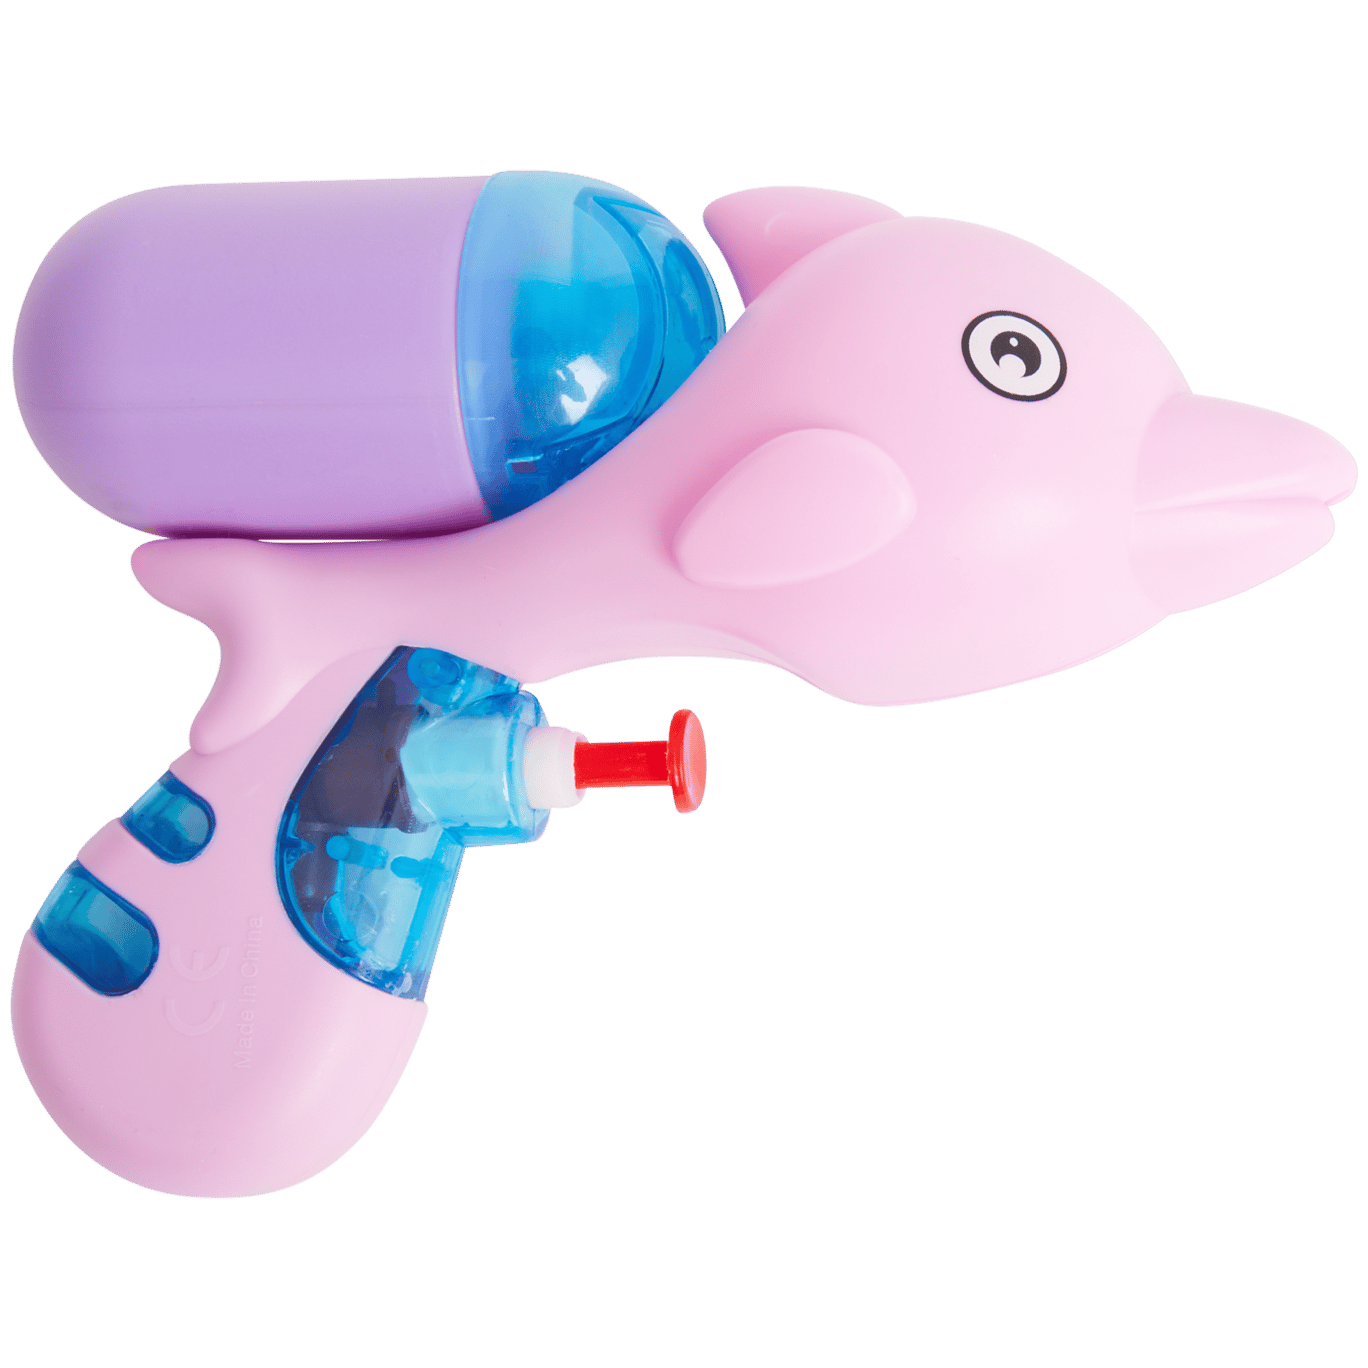 Pistola de água em forma de animal